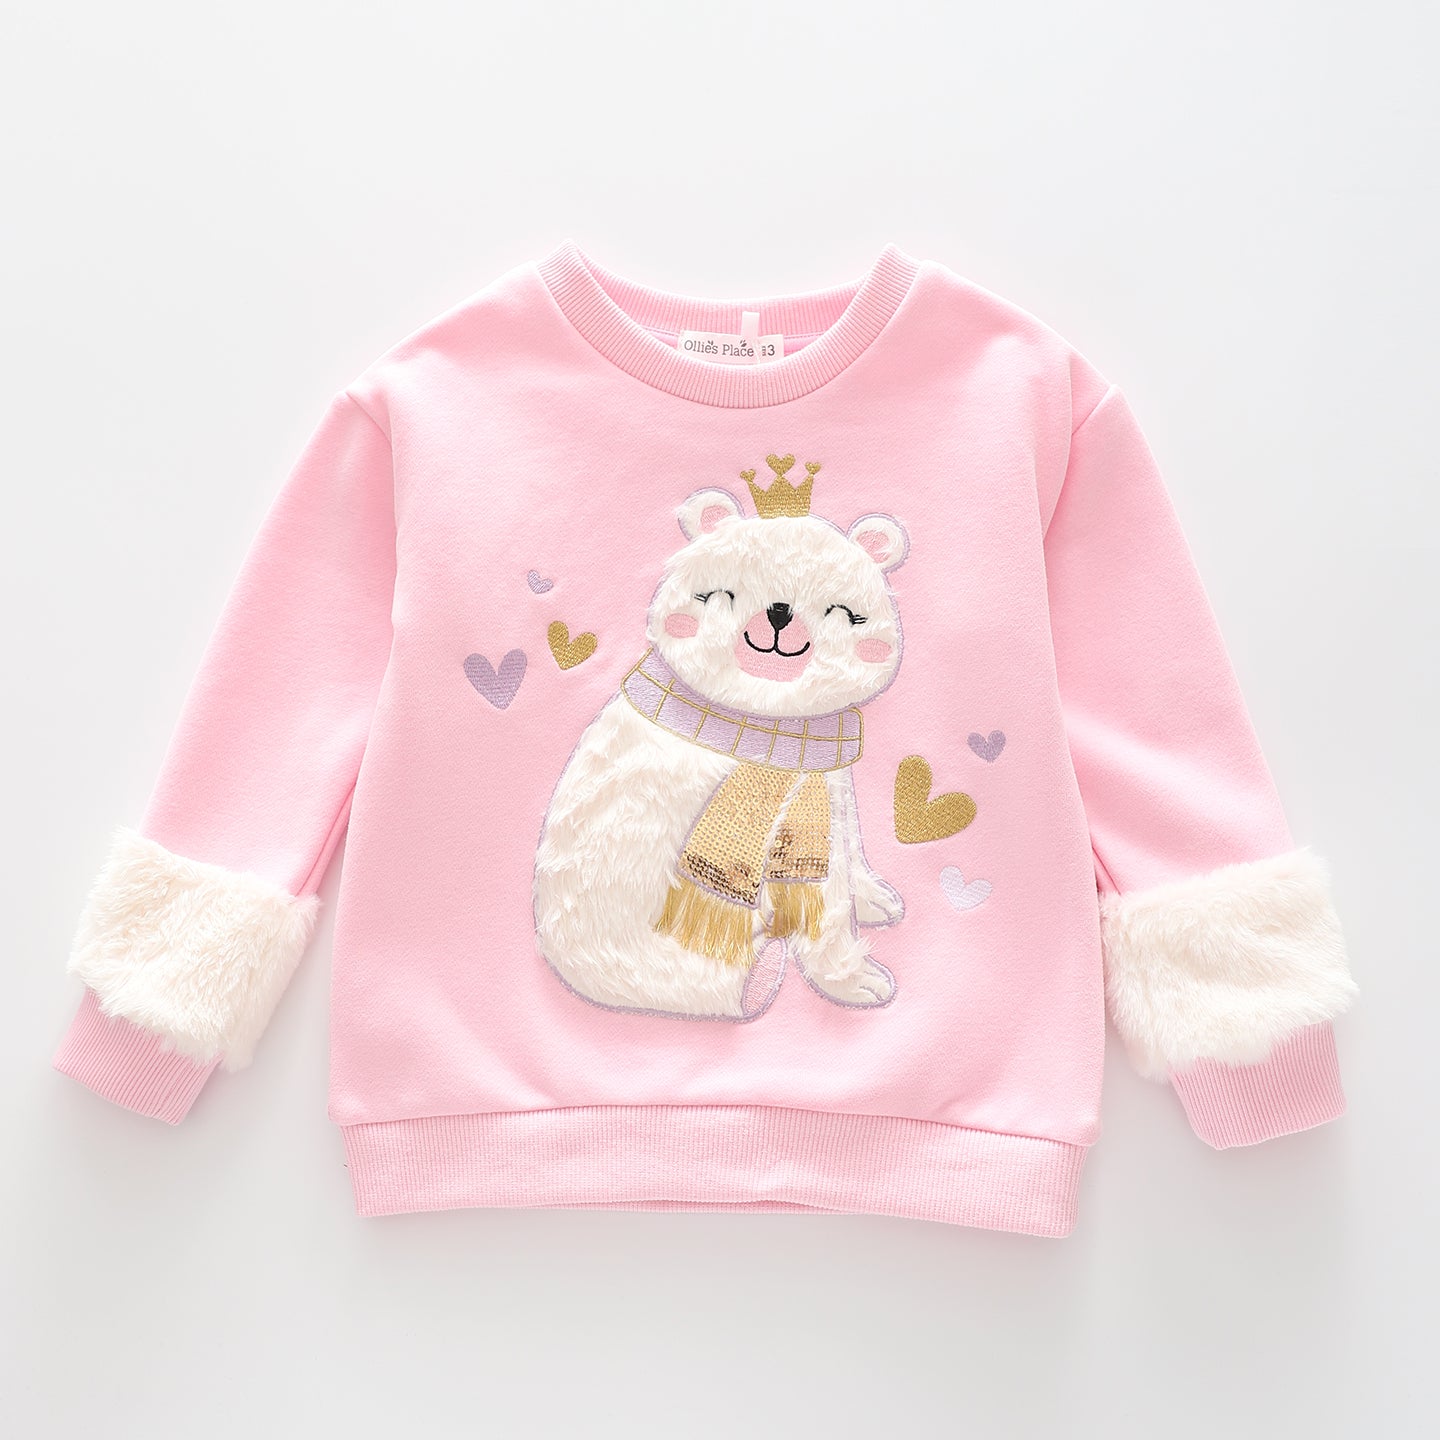 Girls' Animal Magic Sweatshirt